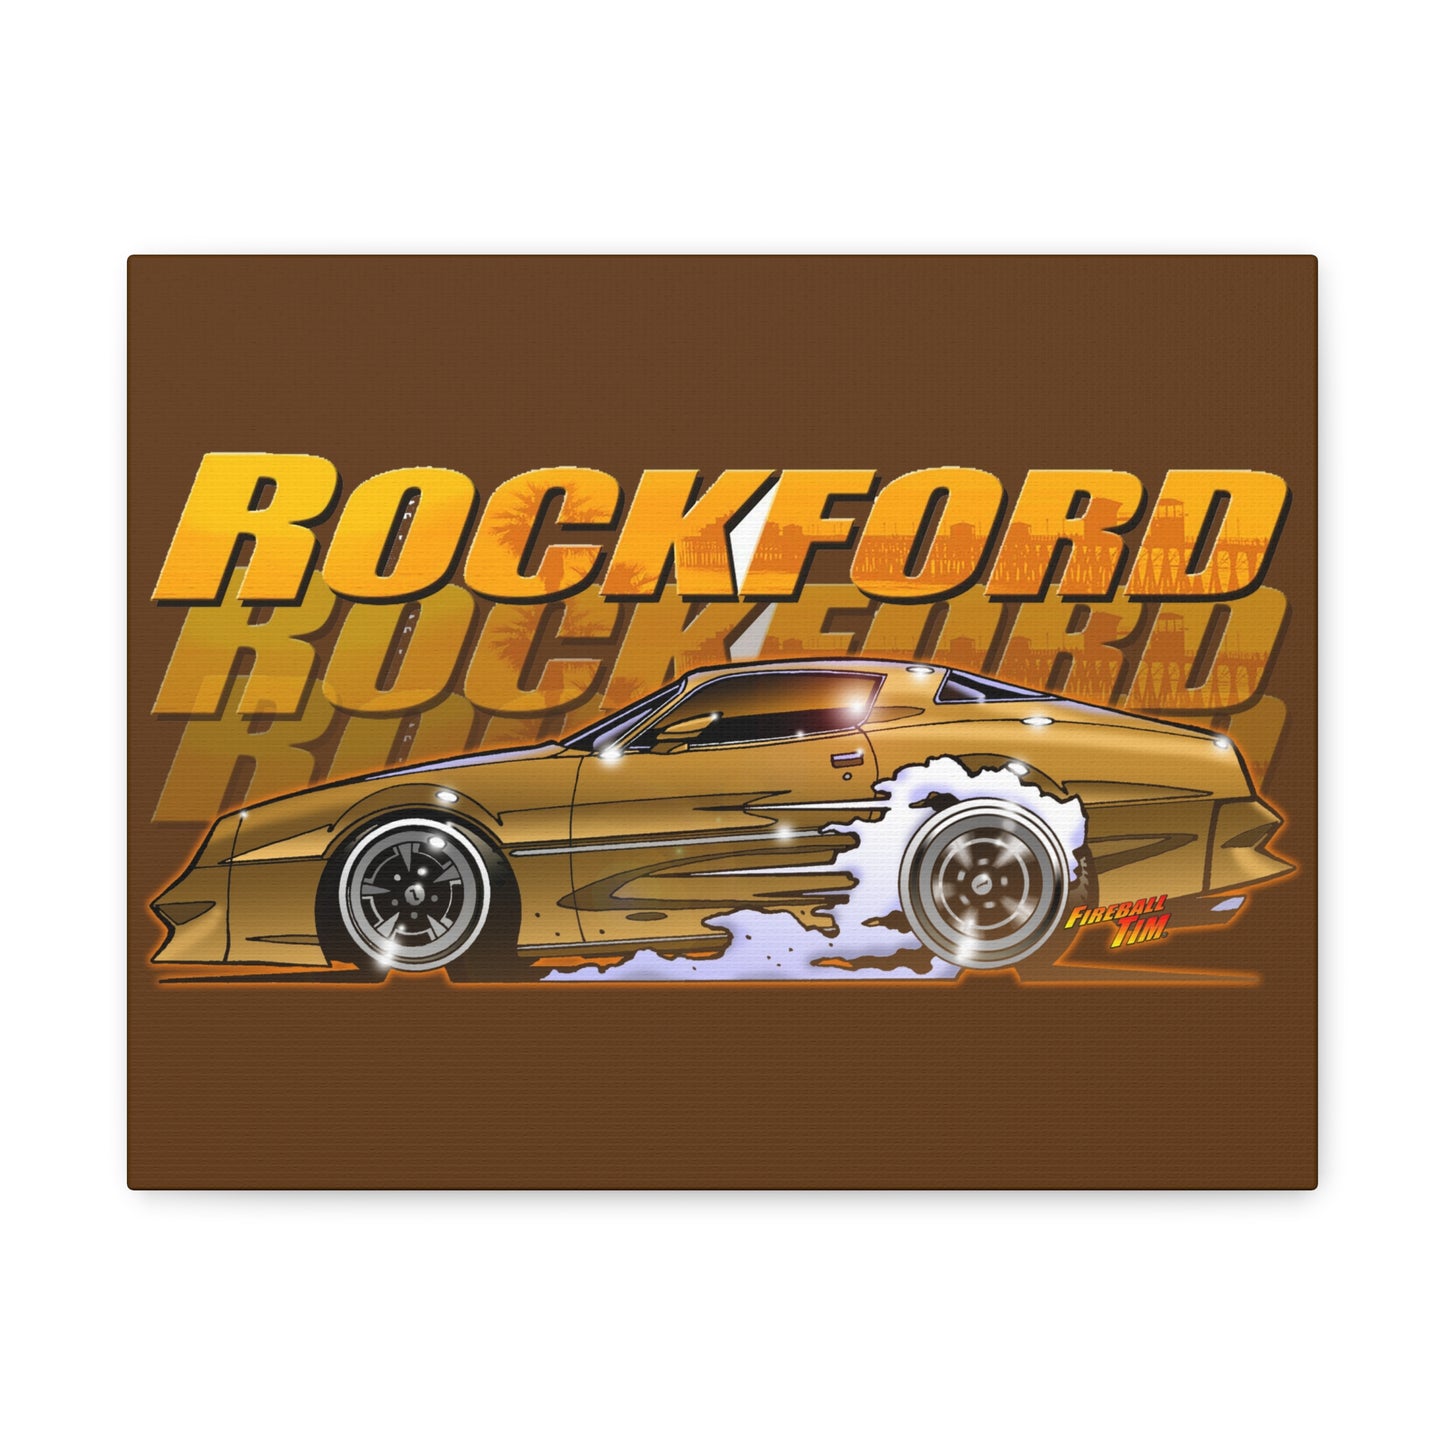 ROCKFORD FILES 1978 Pontiac Canvas Gallery Art Print, Classic TV Show, James Garner, Movie Car, Movie Cars, The Rockford Files